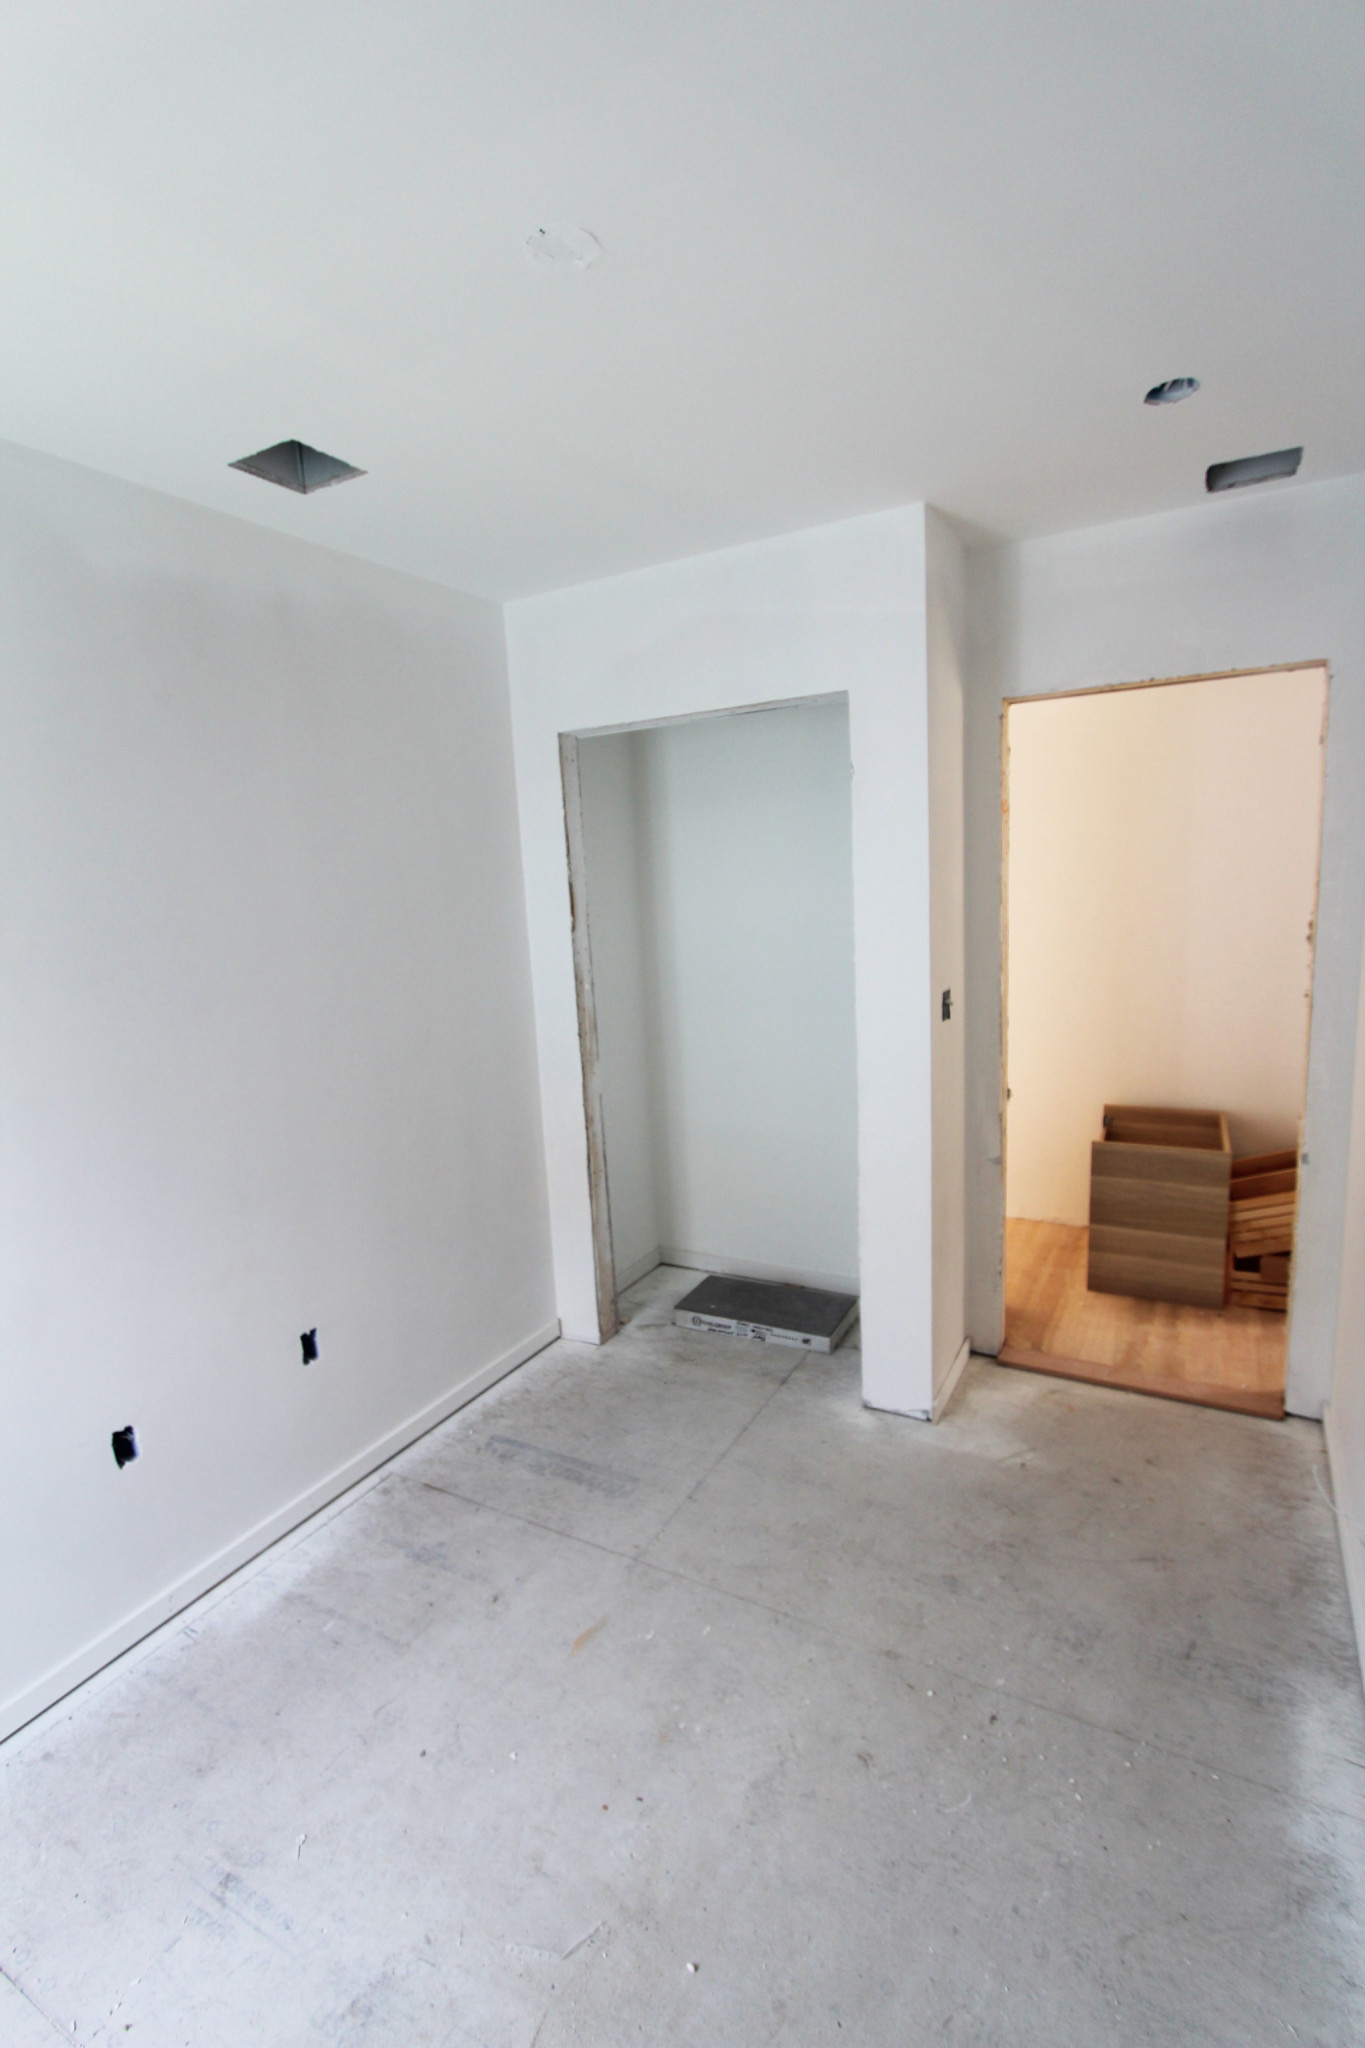 Photos of apartment on Holbrook St.,Boston MA 02130